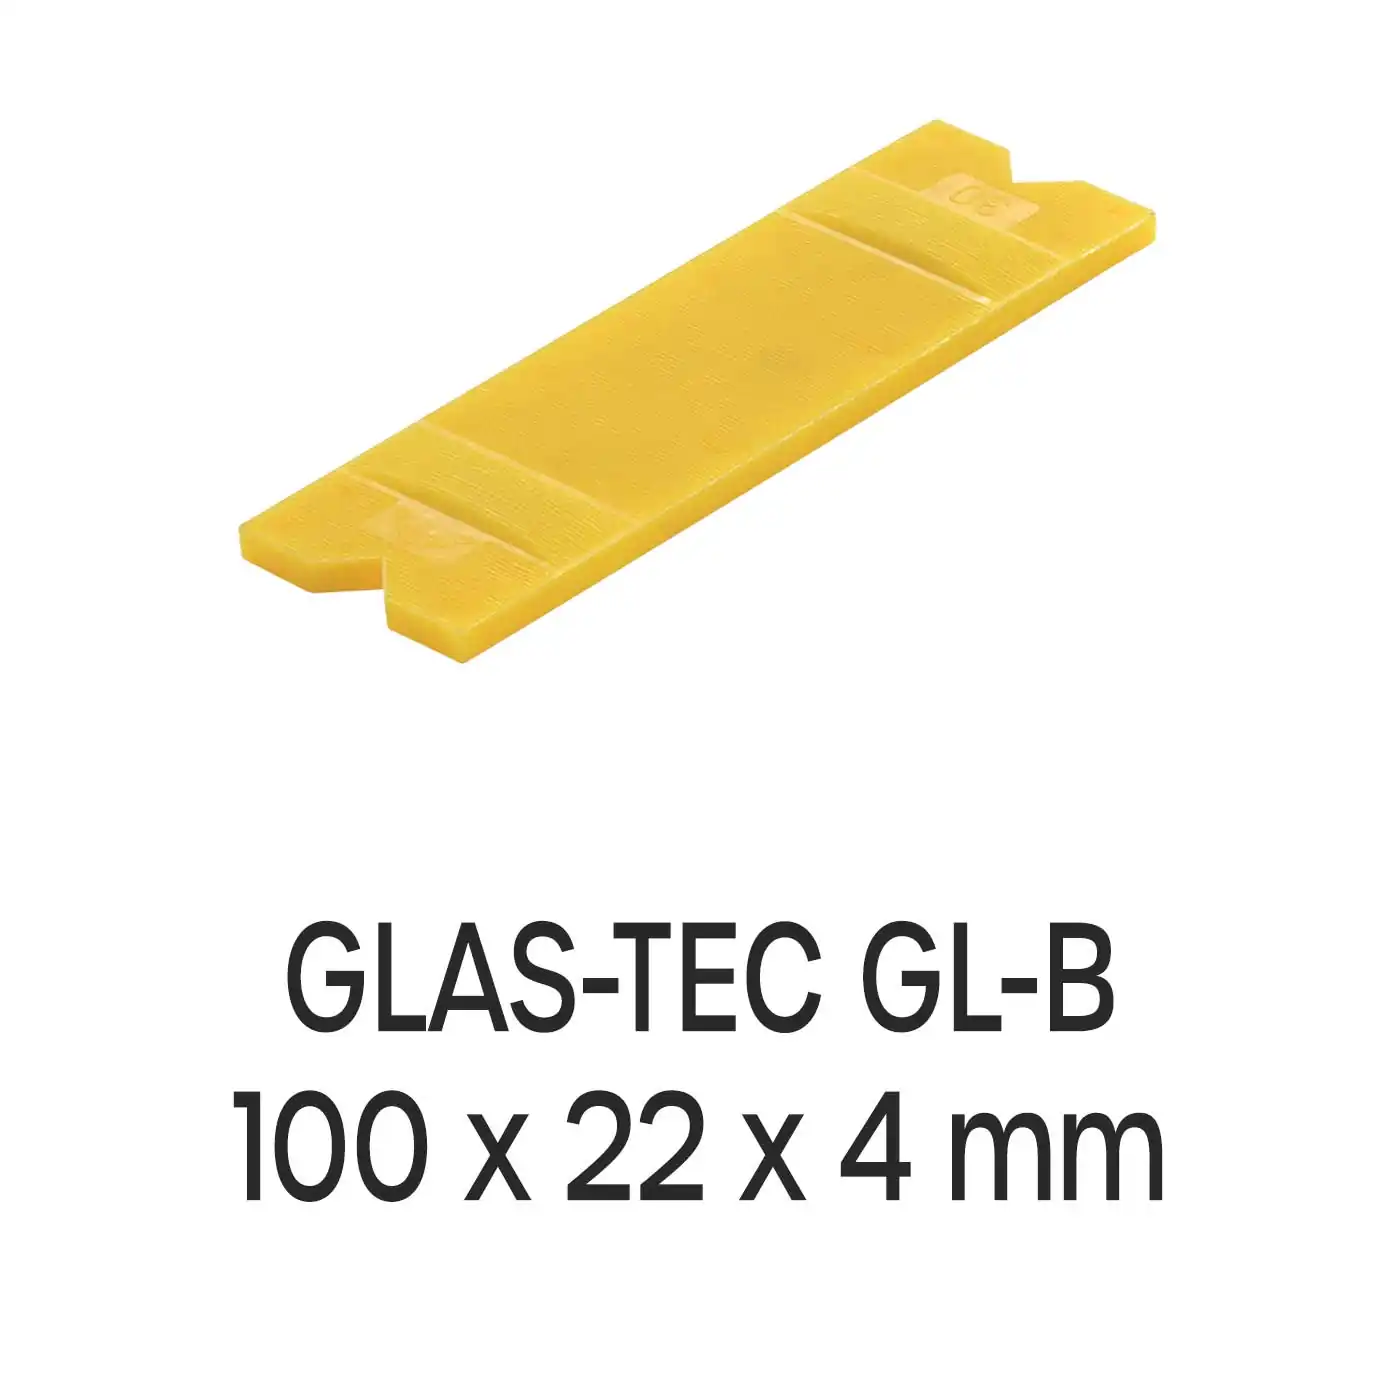 Roto GLAS-TEC GL-B 100 x 22 x 4 mm Verglasungsklötze 1000 Stück